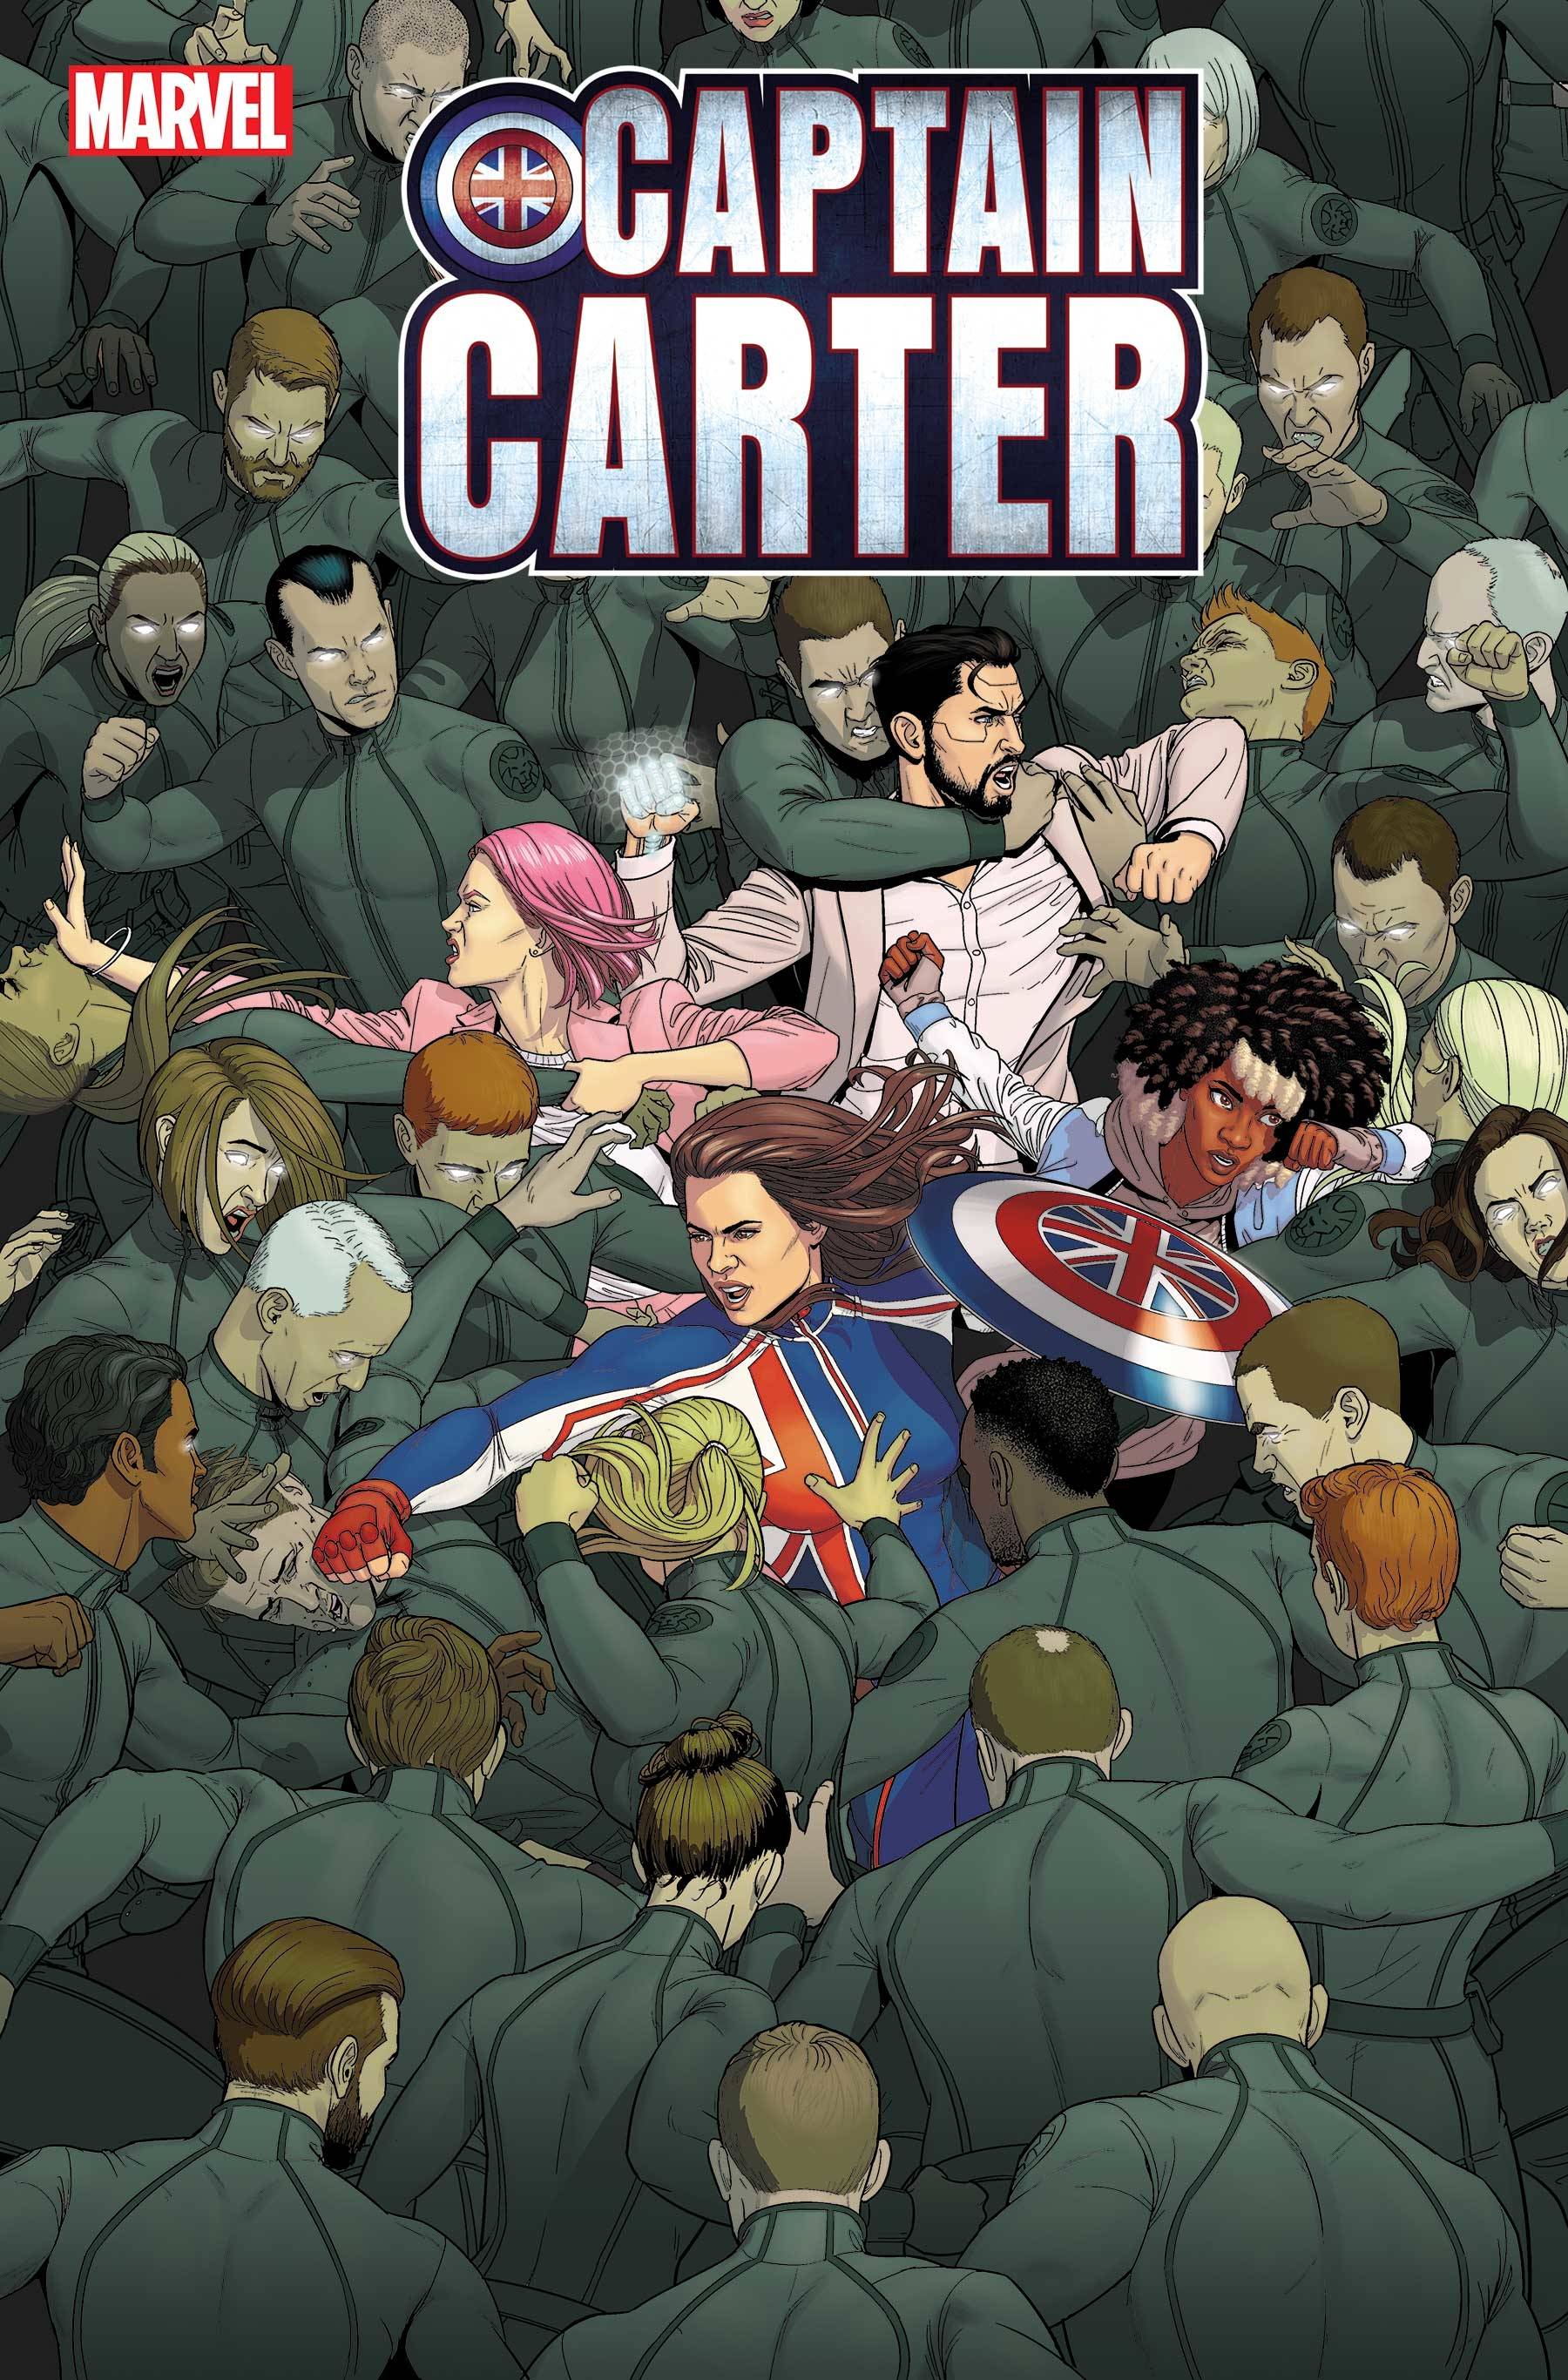 08/10/2022 CAPTAIN CARTER #5 (OF 5)